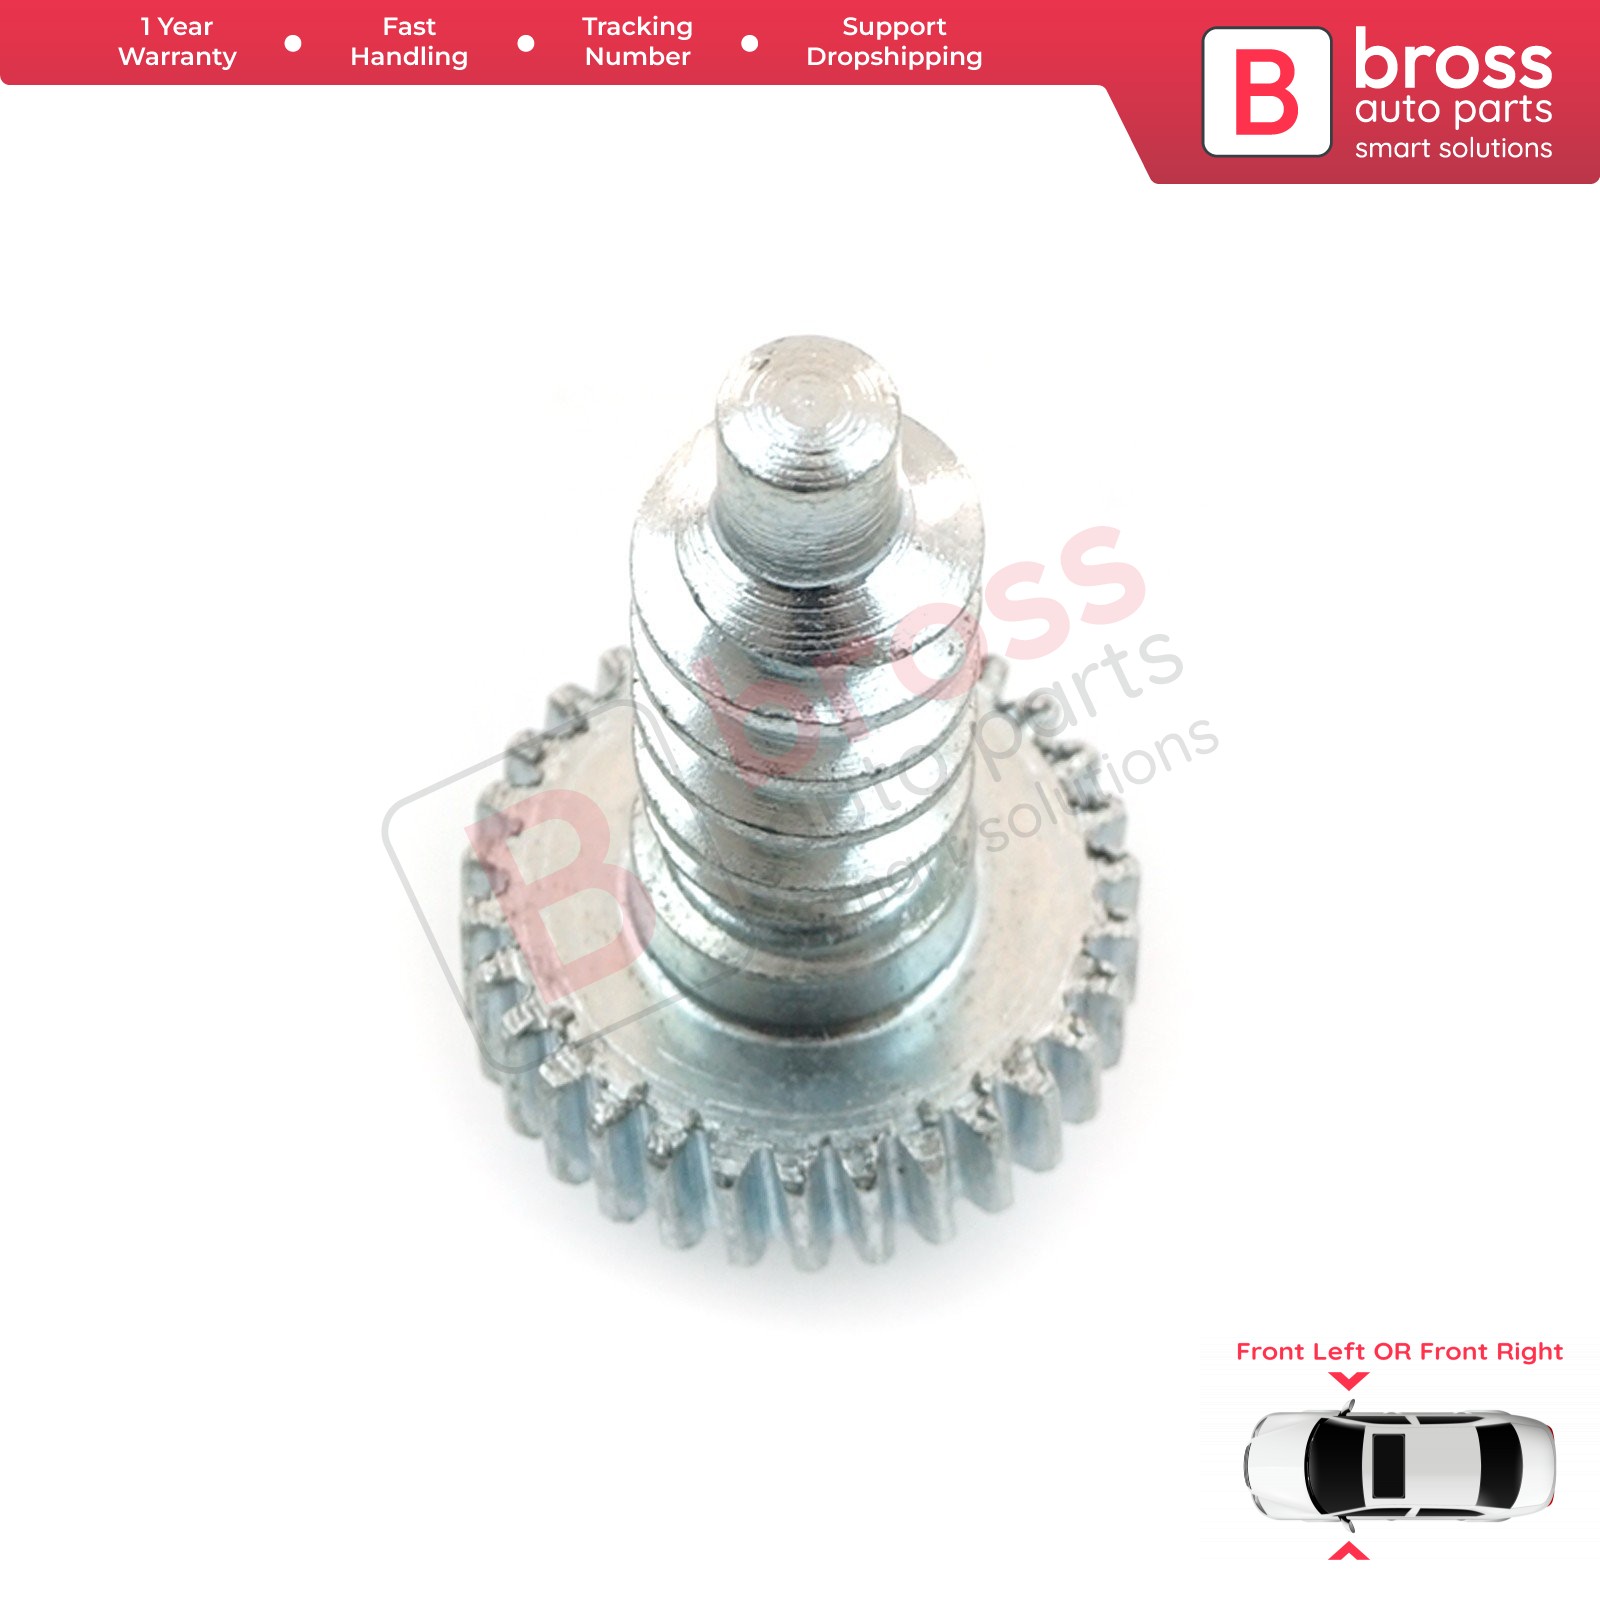 Bross Auto Parts LLC - BGE5 Side Mirror Motor Gear Folding Part